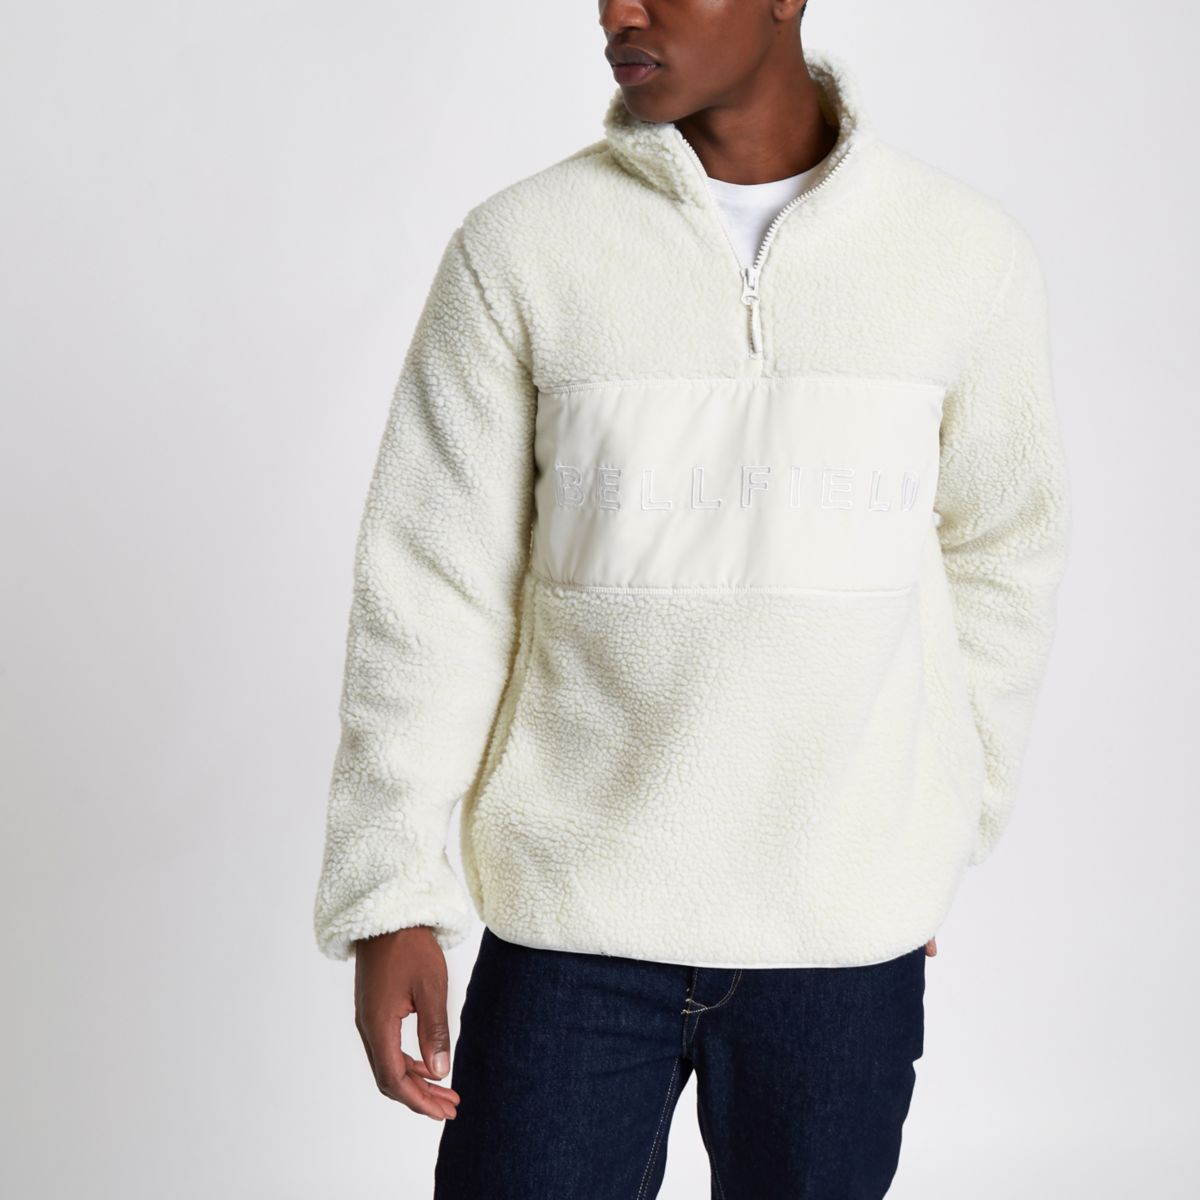 Bellfield cream pullover fleece jacket - Jackets - Coats & Jackets - men